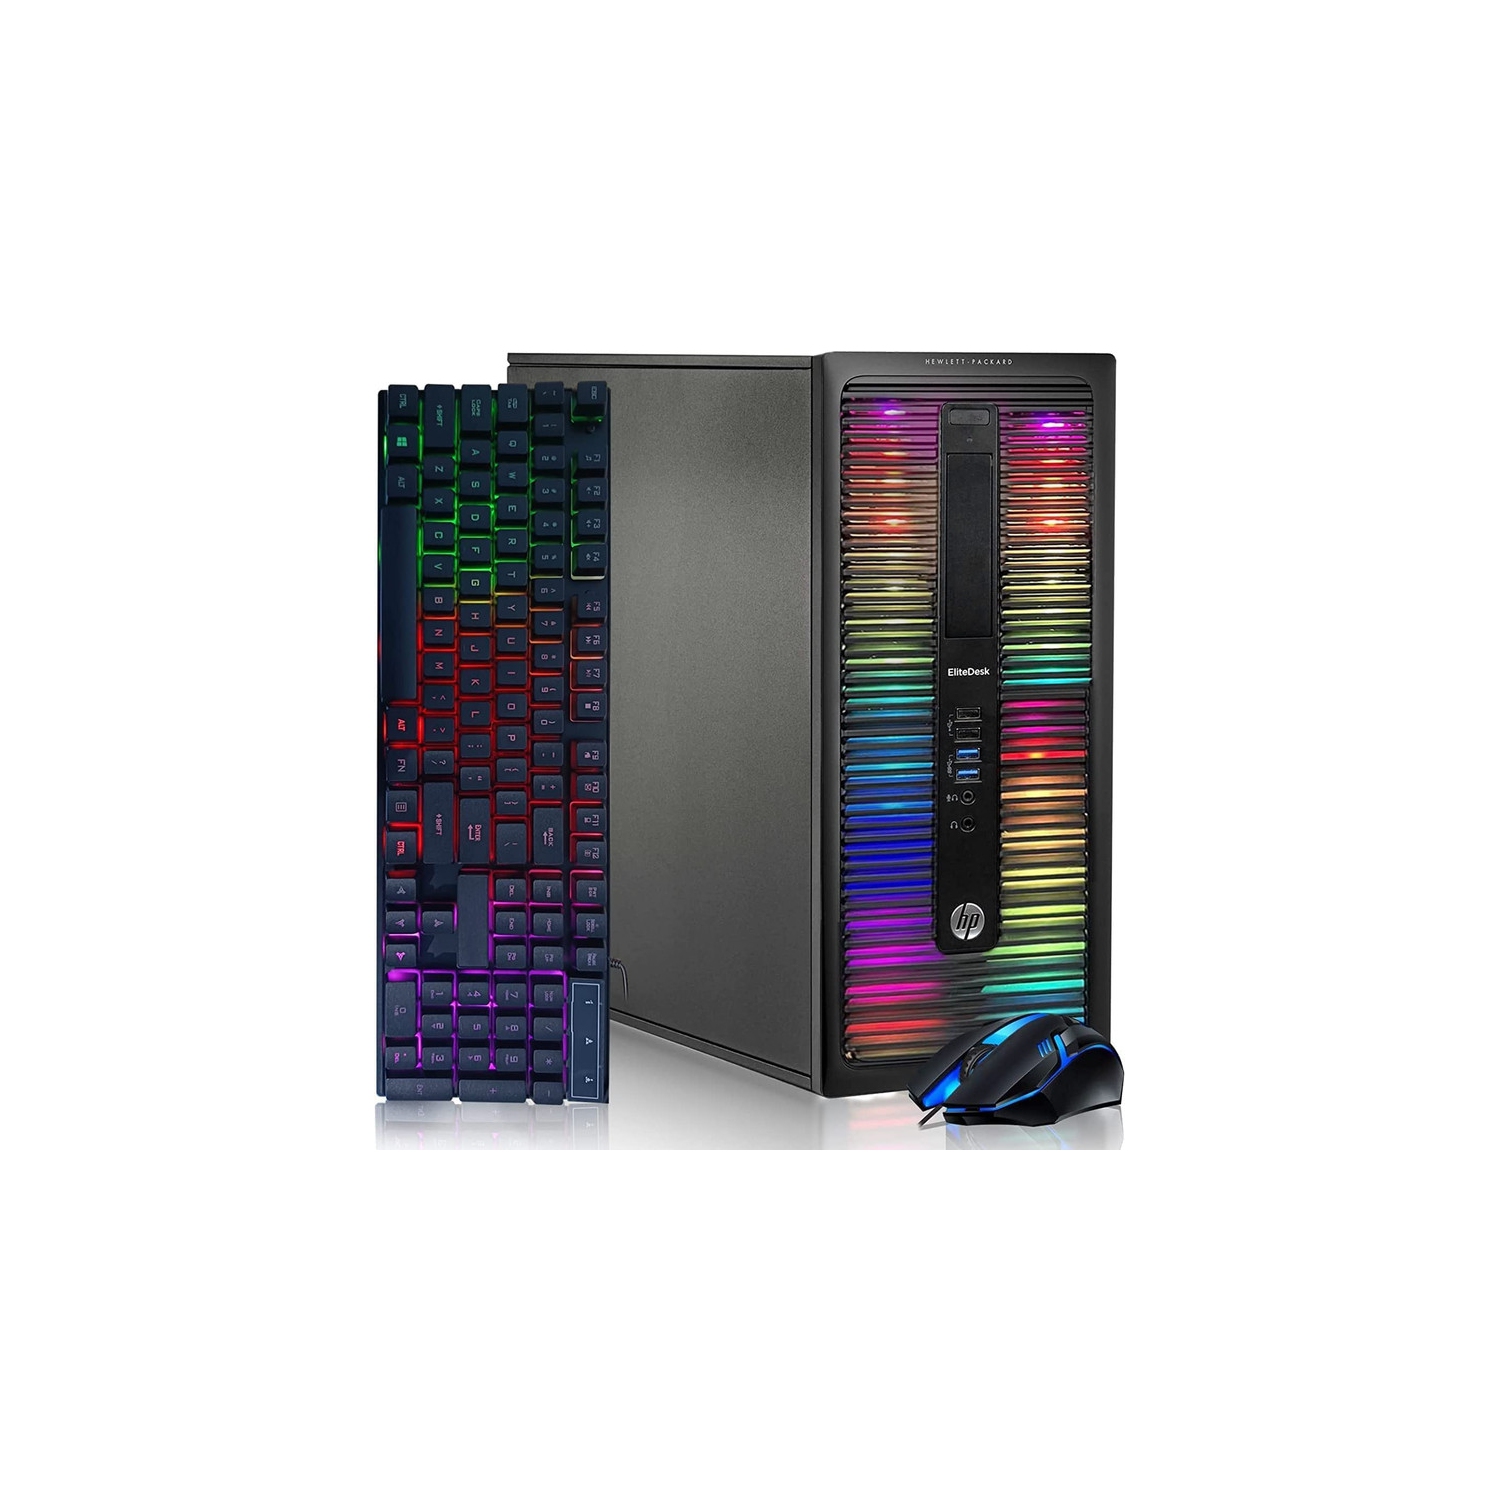 Refurbished (Excellent) - HP RGB Gaming Desktop Computer - Intel Quad I7 - 3.9GHz, 32GB, 512G SSD + 3TB, GeForce GTX 1660 Super, RGB Keyboard & Mouse, WiFi & BT 5.0, Win 10 Pro